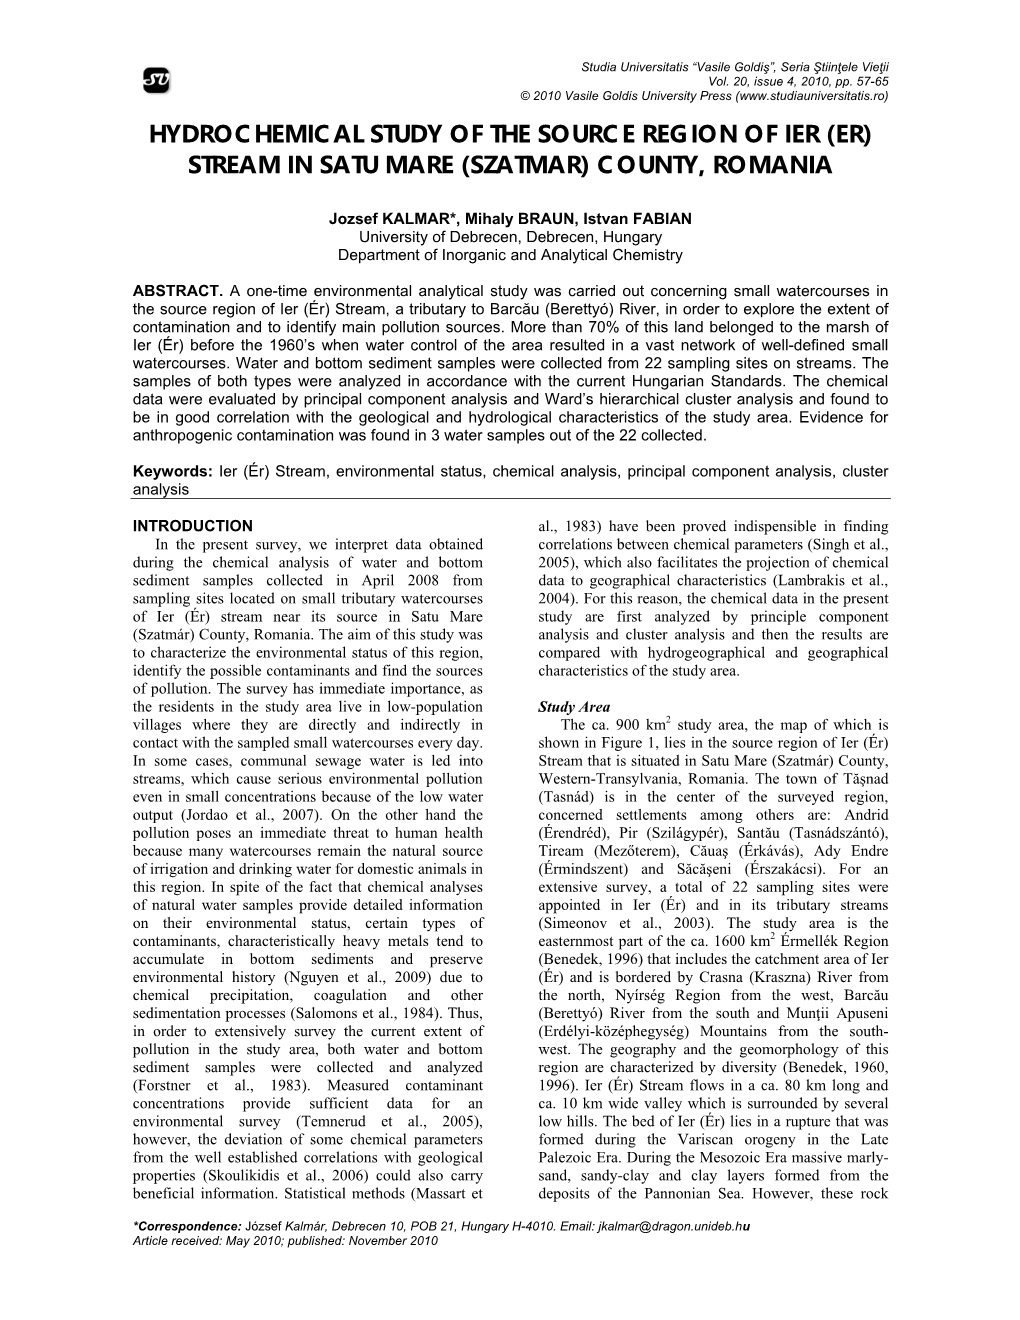 Hydrochemical Study of the Source Region of Ier (Er) Stream in Satu Mare (Szatmar) County, Romania